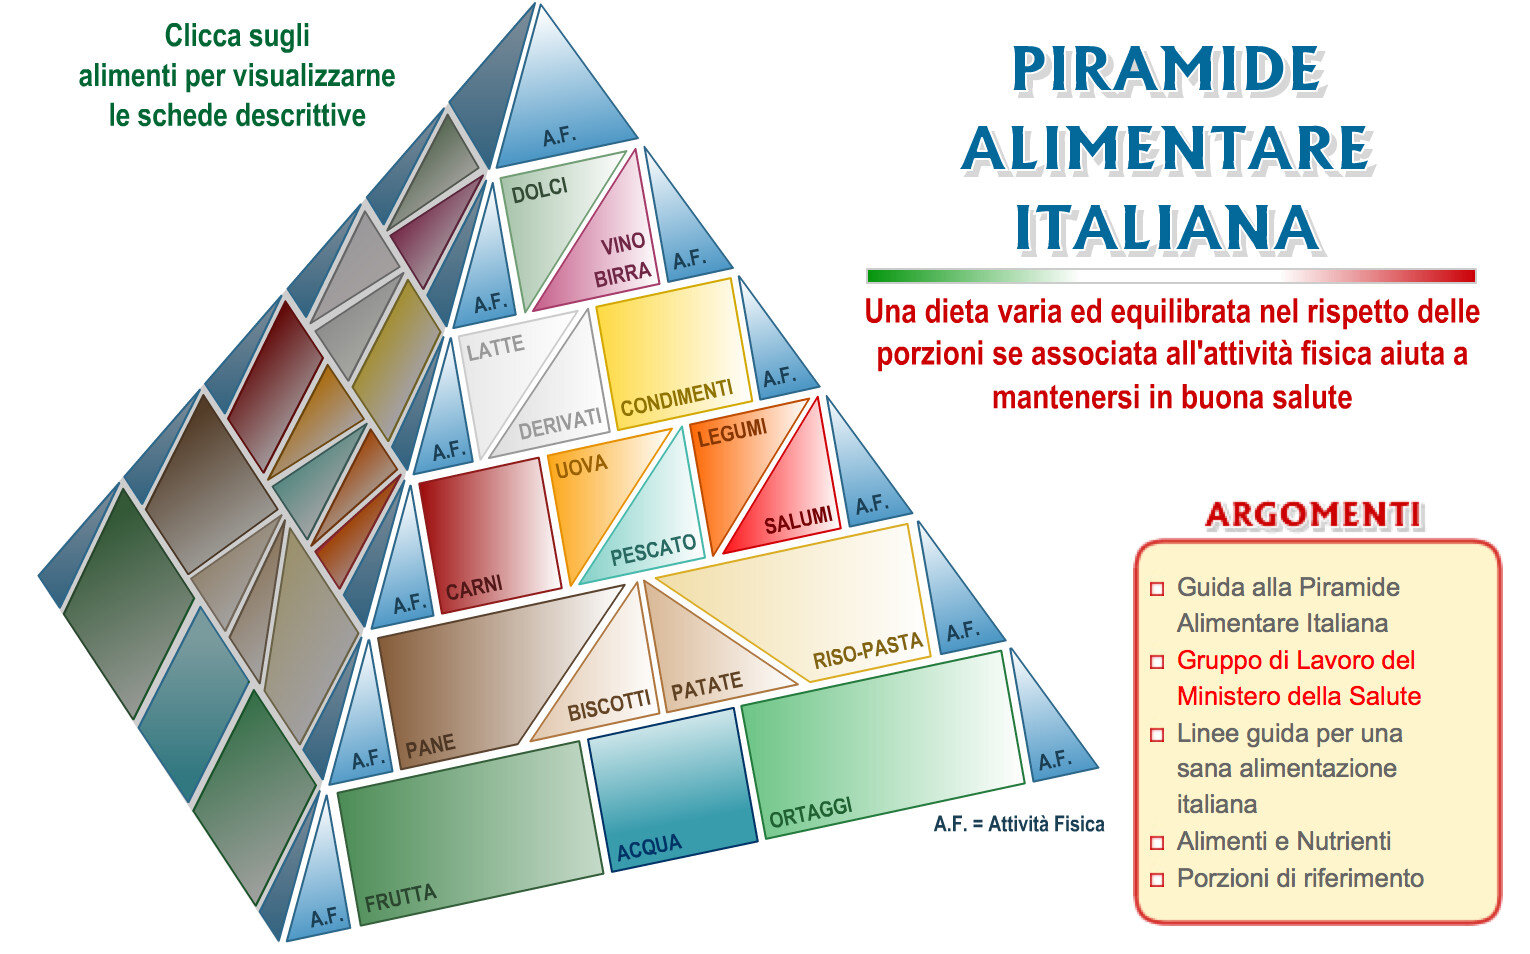 Italian Dietary Guidelines